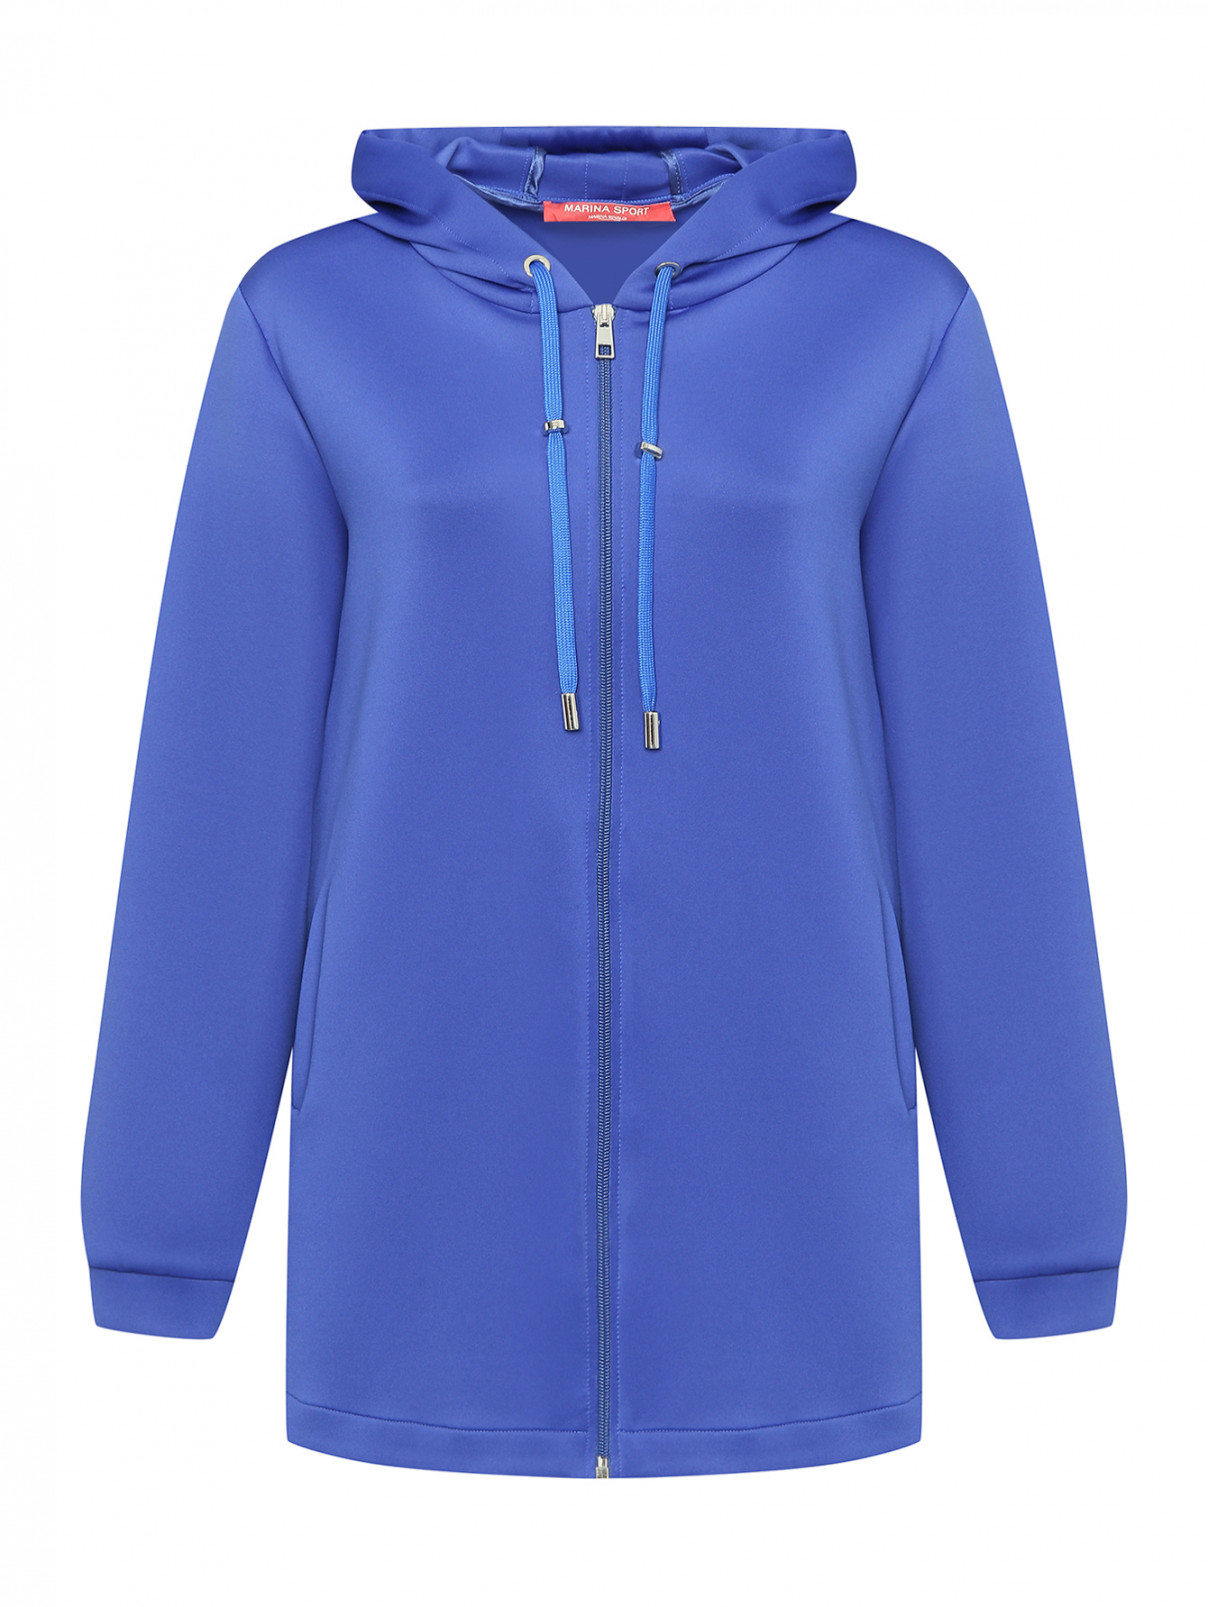 Толстовка с карманами на молнии Marina Rinaldi  –  Общий вид  – Цвет:  Синий